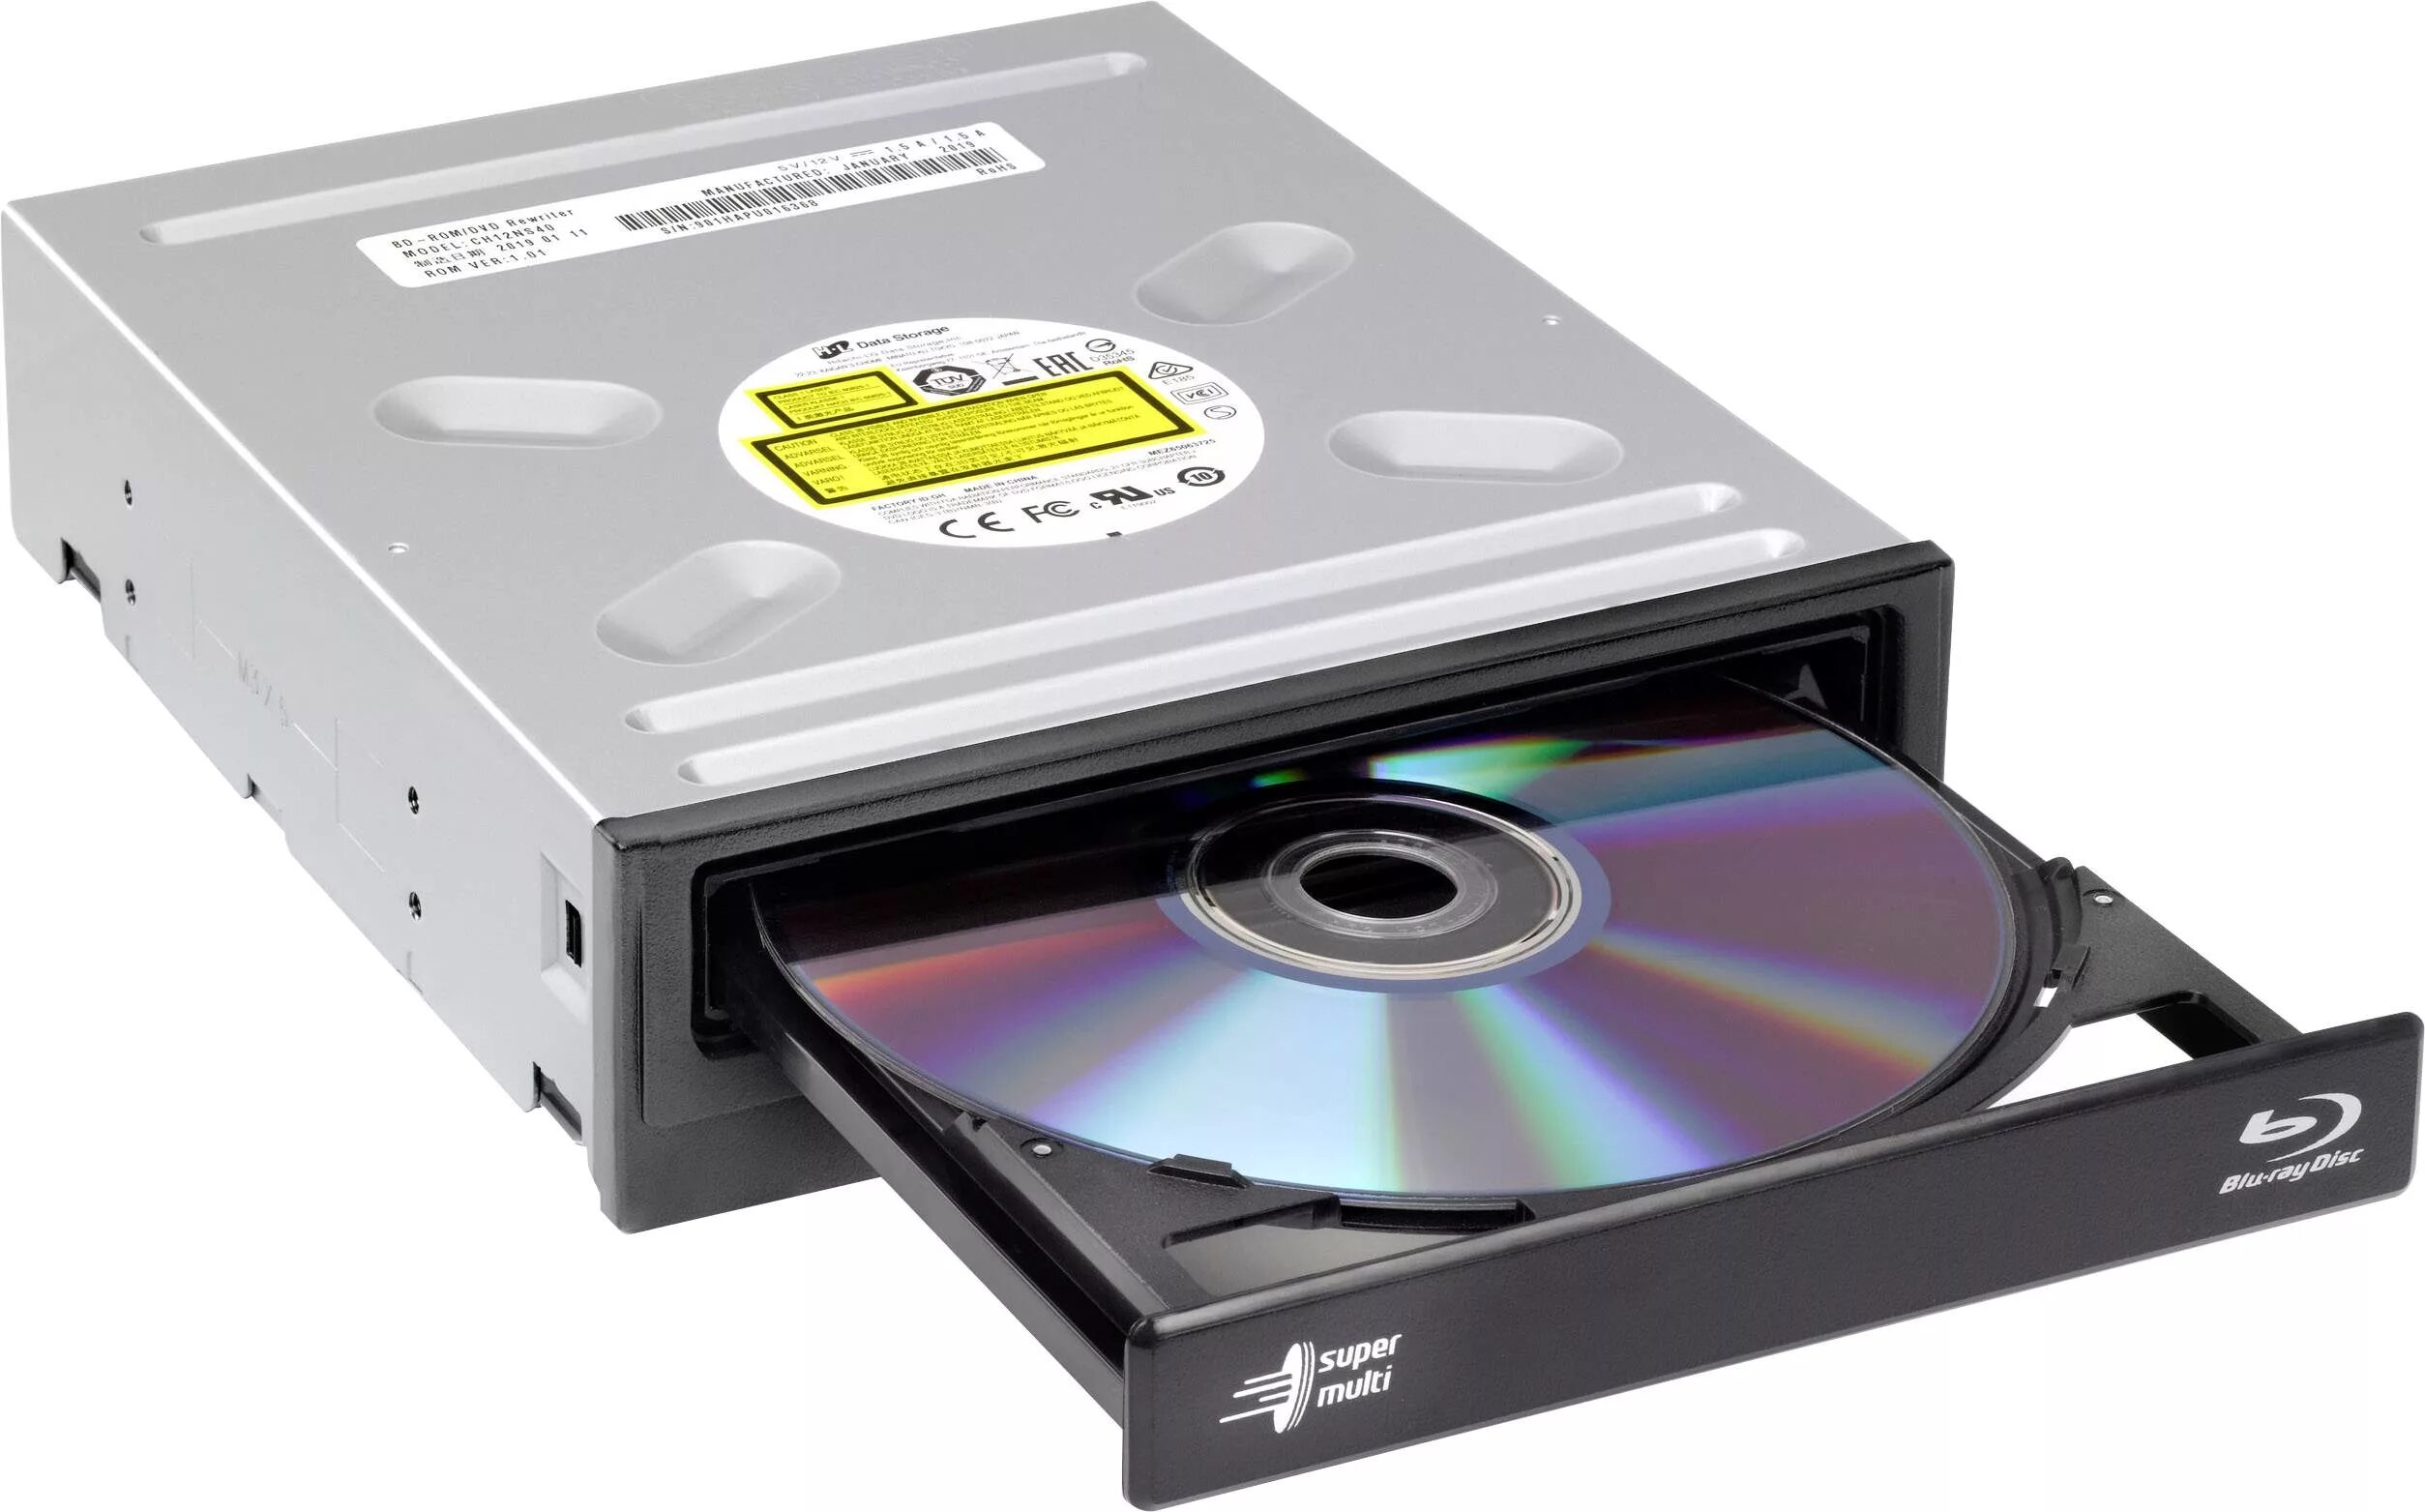 DVD-RW LG gh24nsd5. DVD привод LG gh24nsd5. DVD±RW LG gh24nsd5 OEM. Оптический привод DVD-RW LG gh24nsd5, внутренний, SATA, черный.